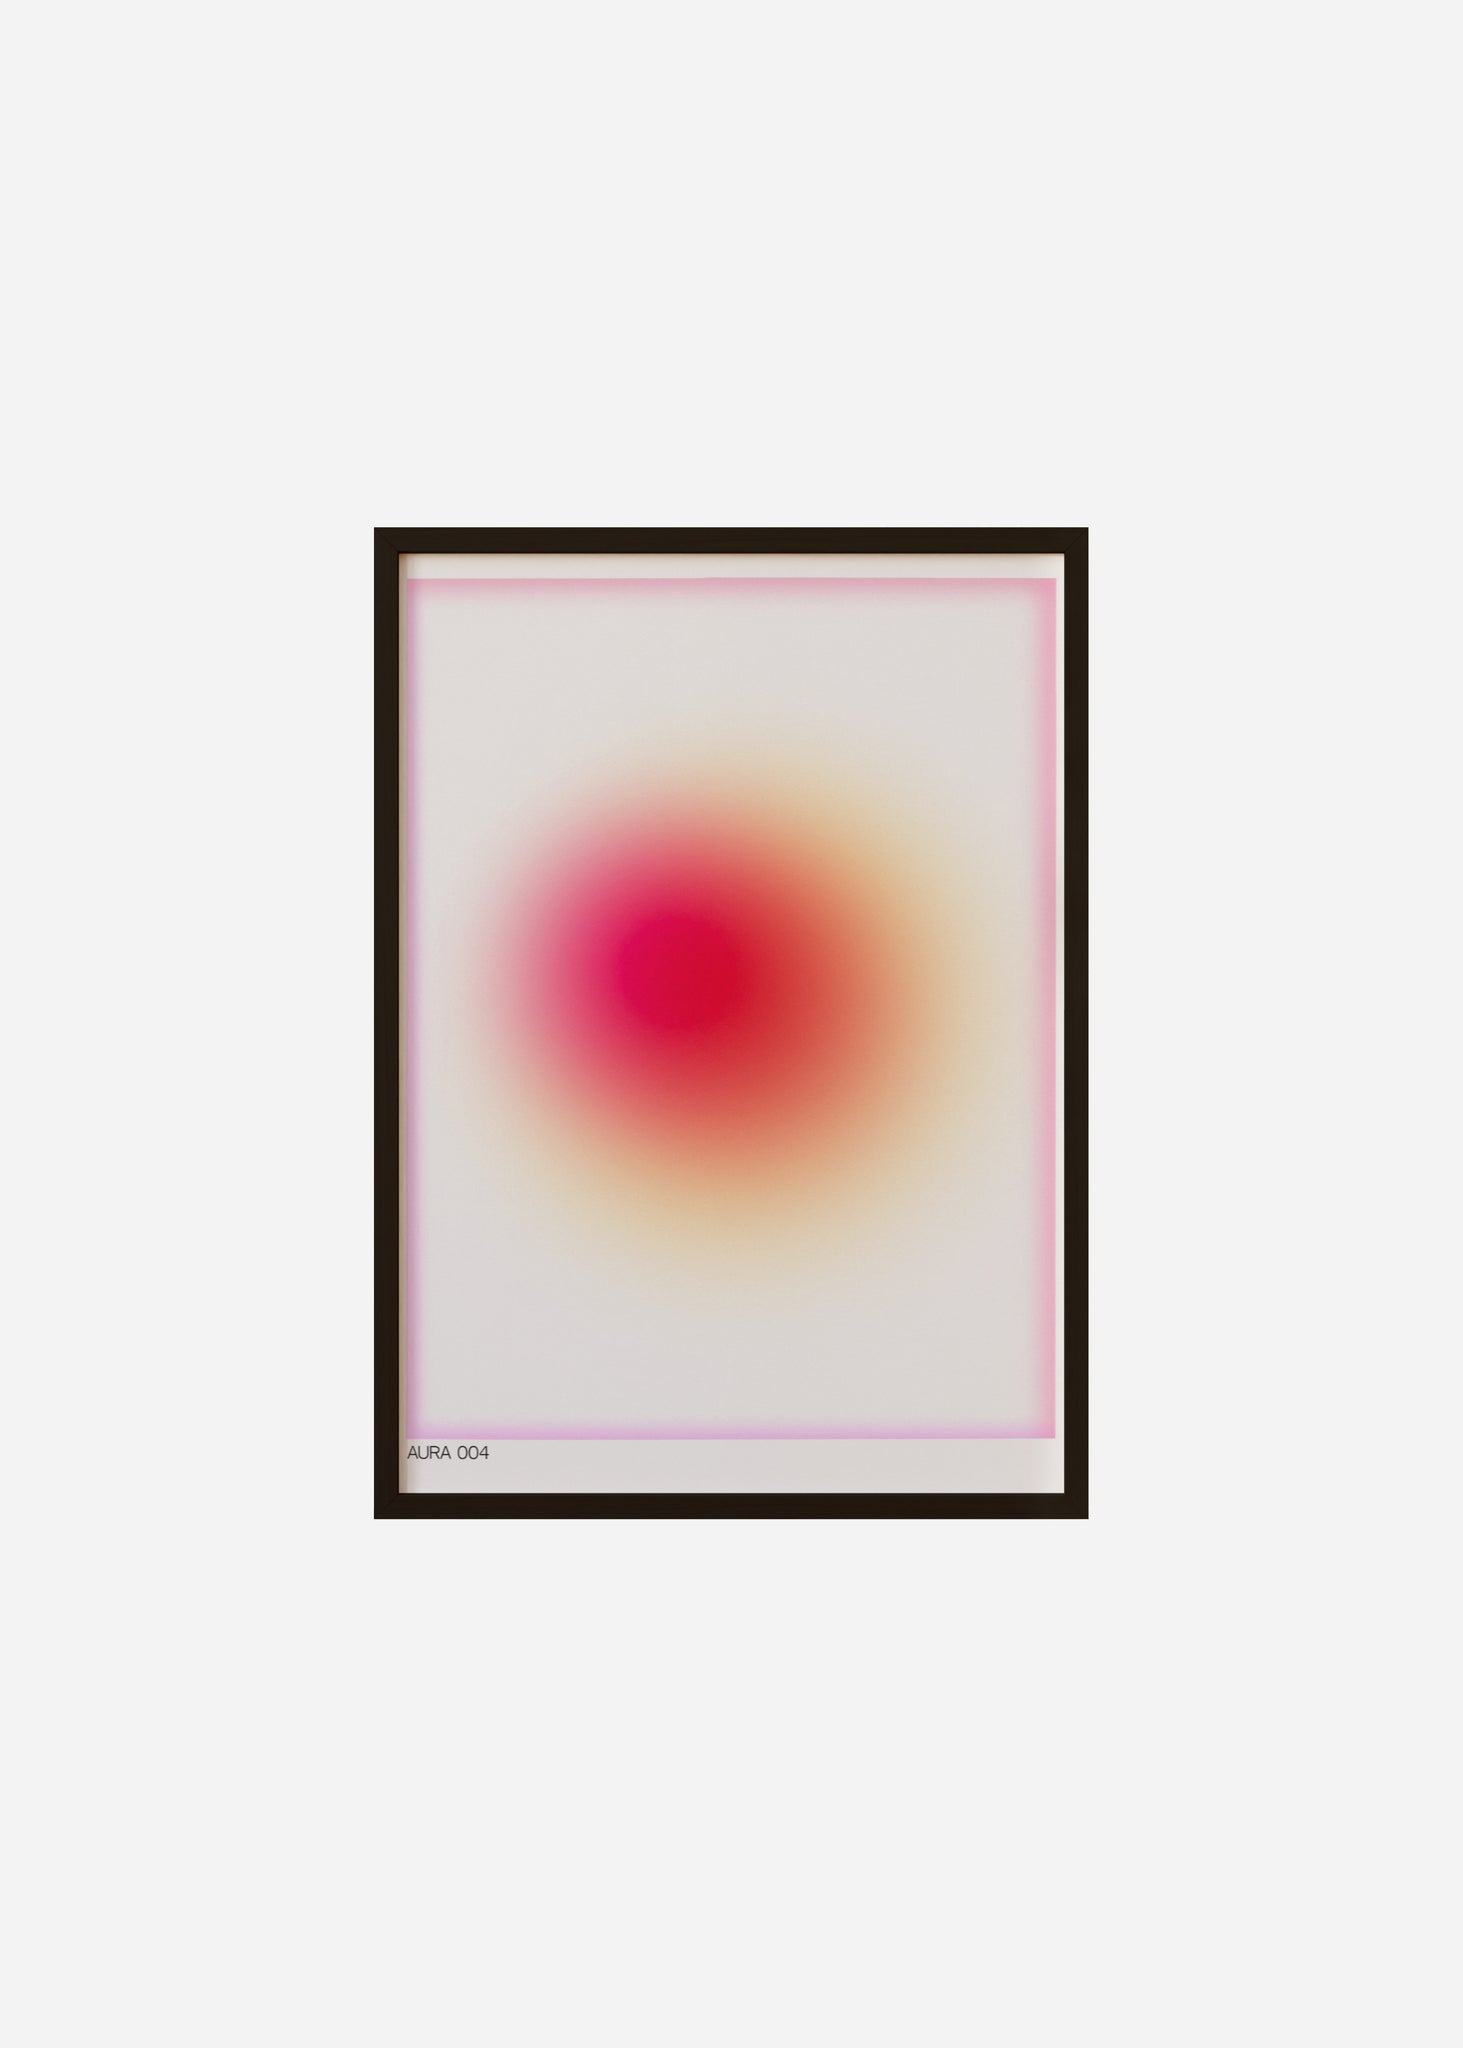 aura 004 Framed Print